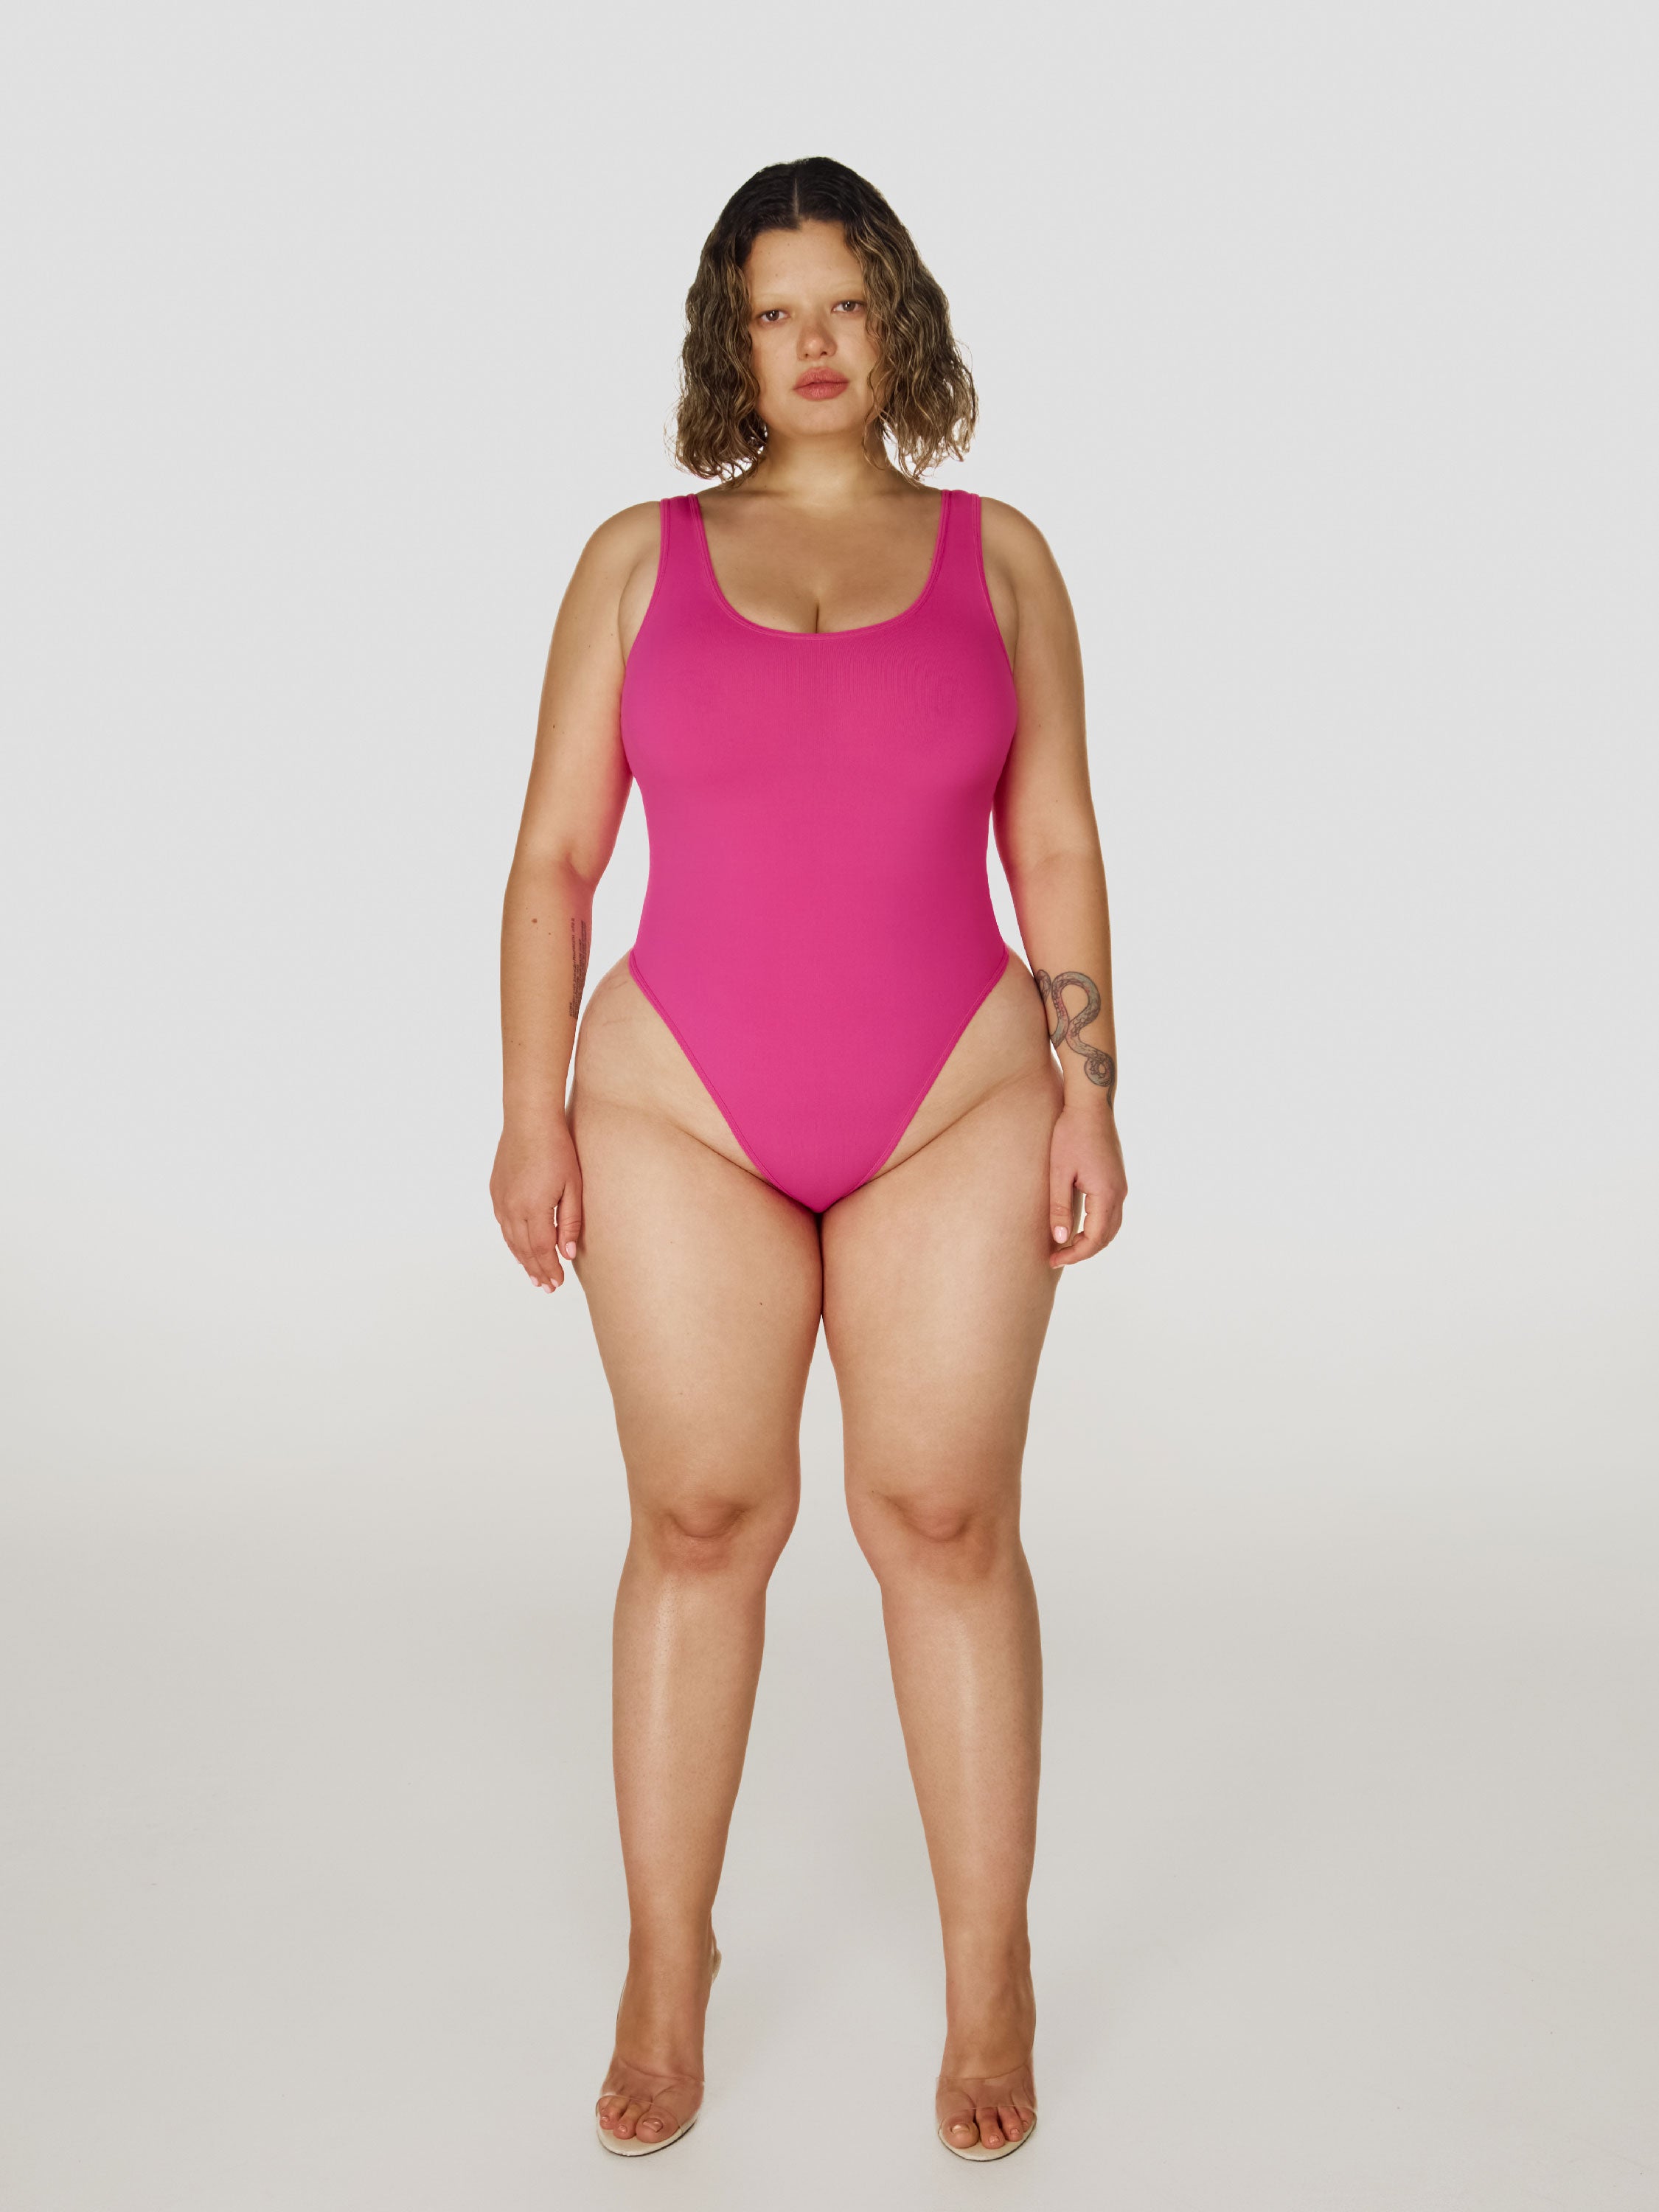 Full shot of a girl in a pink sleeveless bodysuit